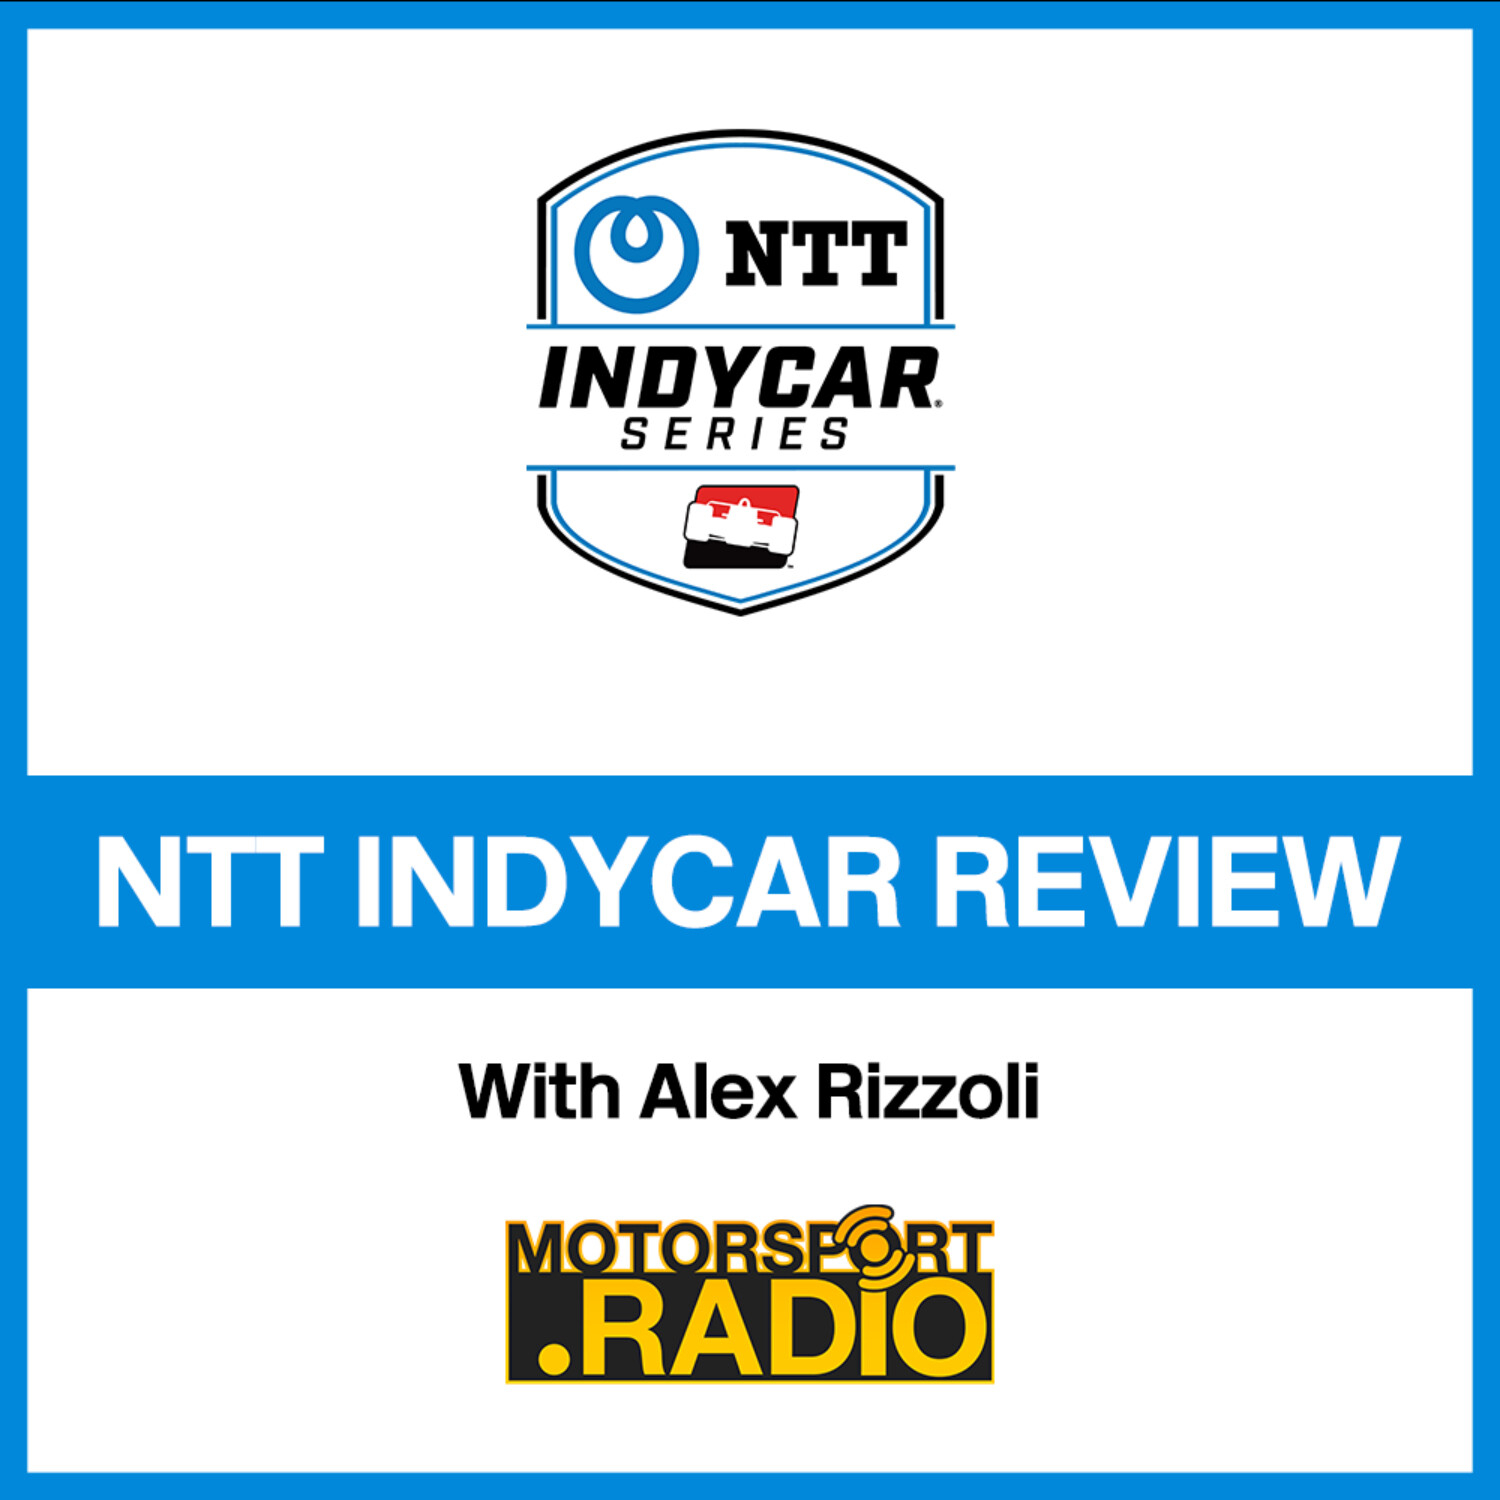 NTT INDYCAR Review with Alex Rizzoli